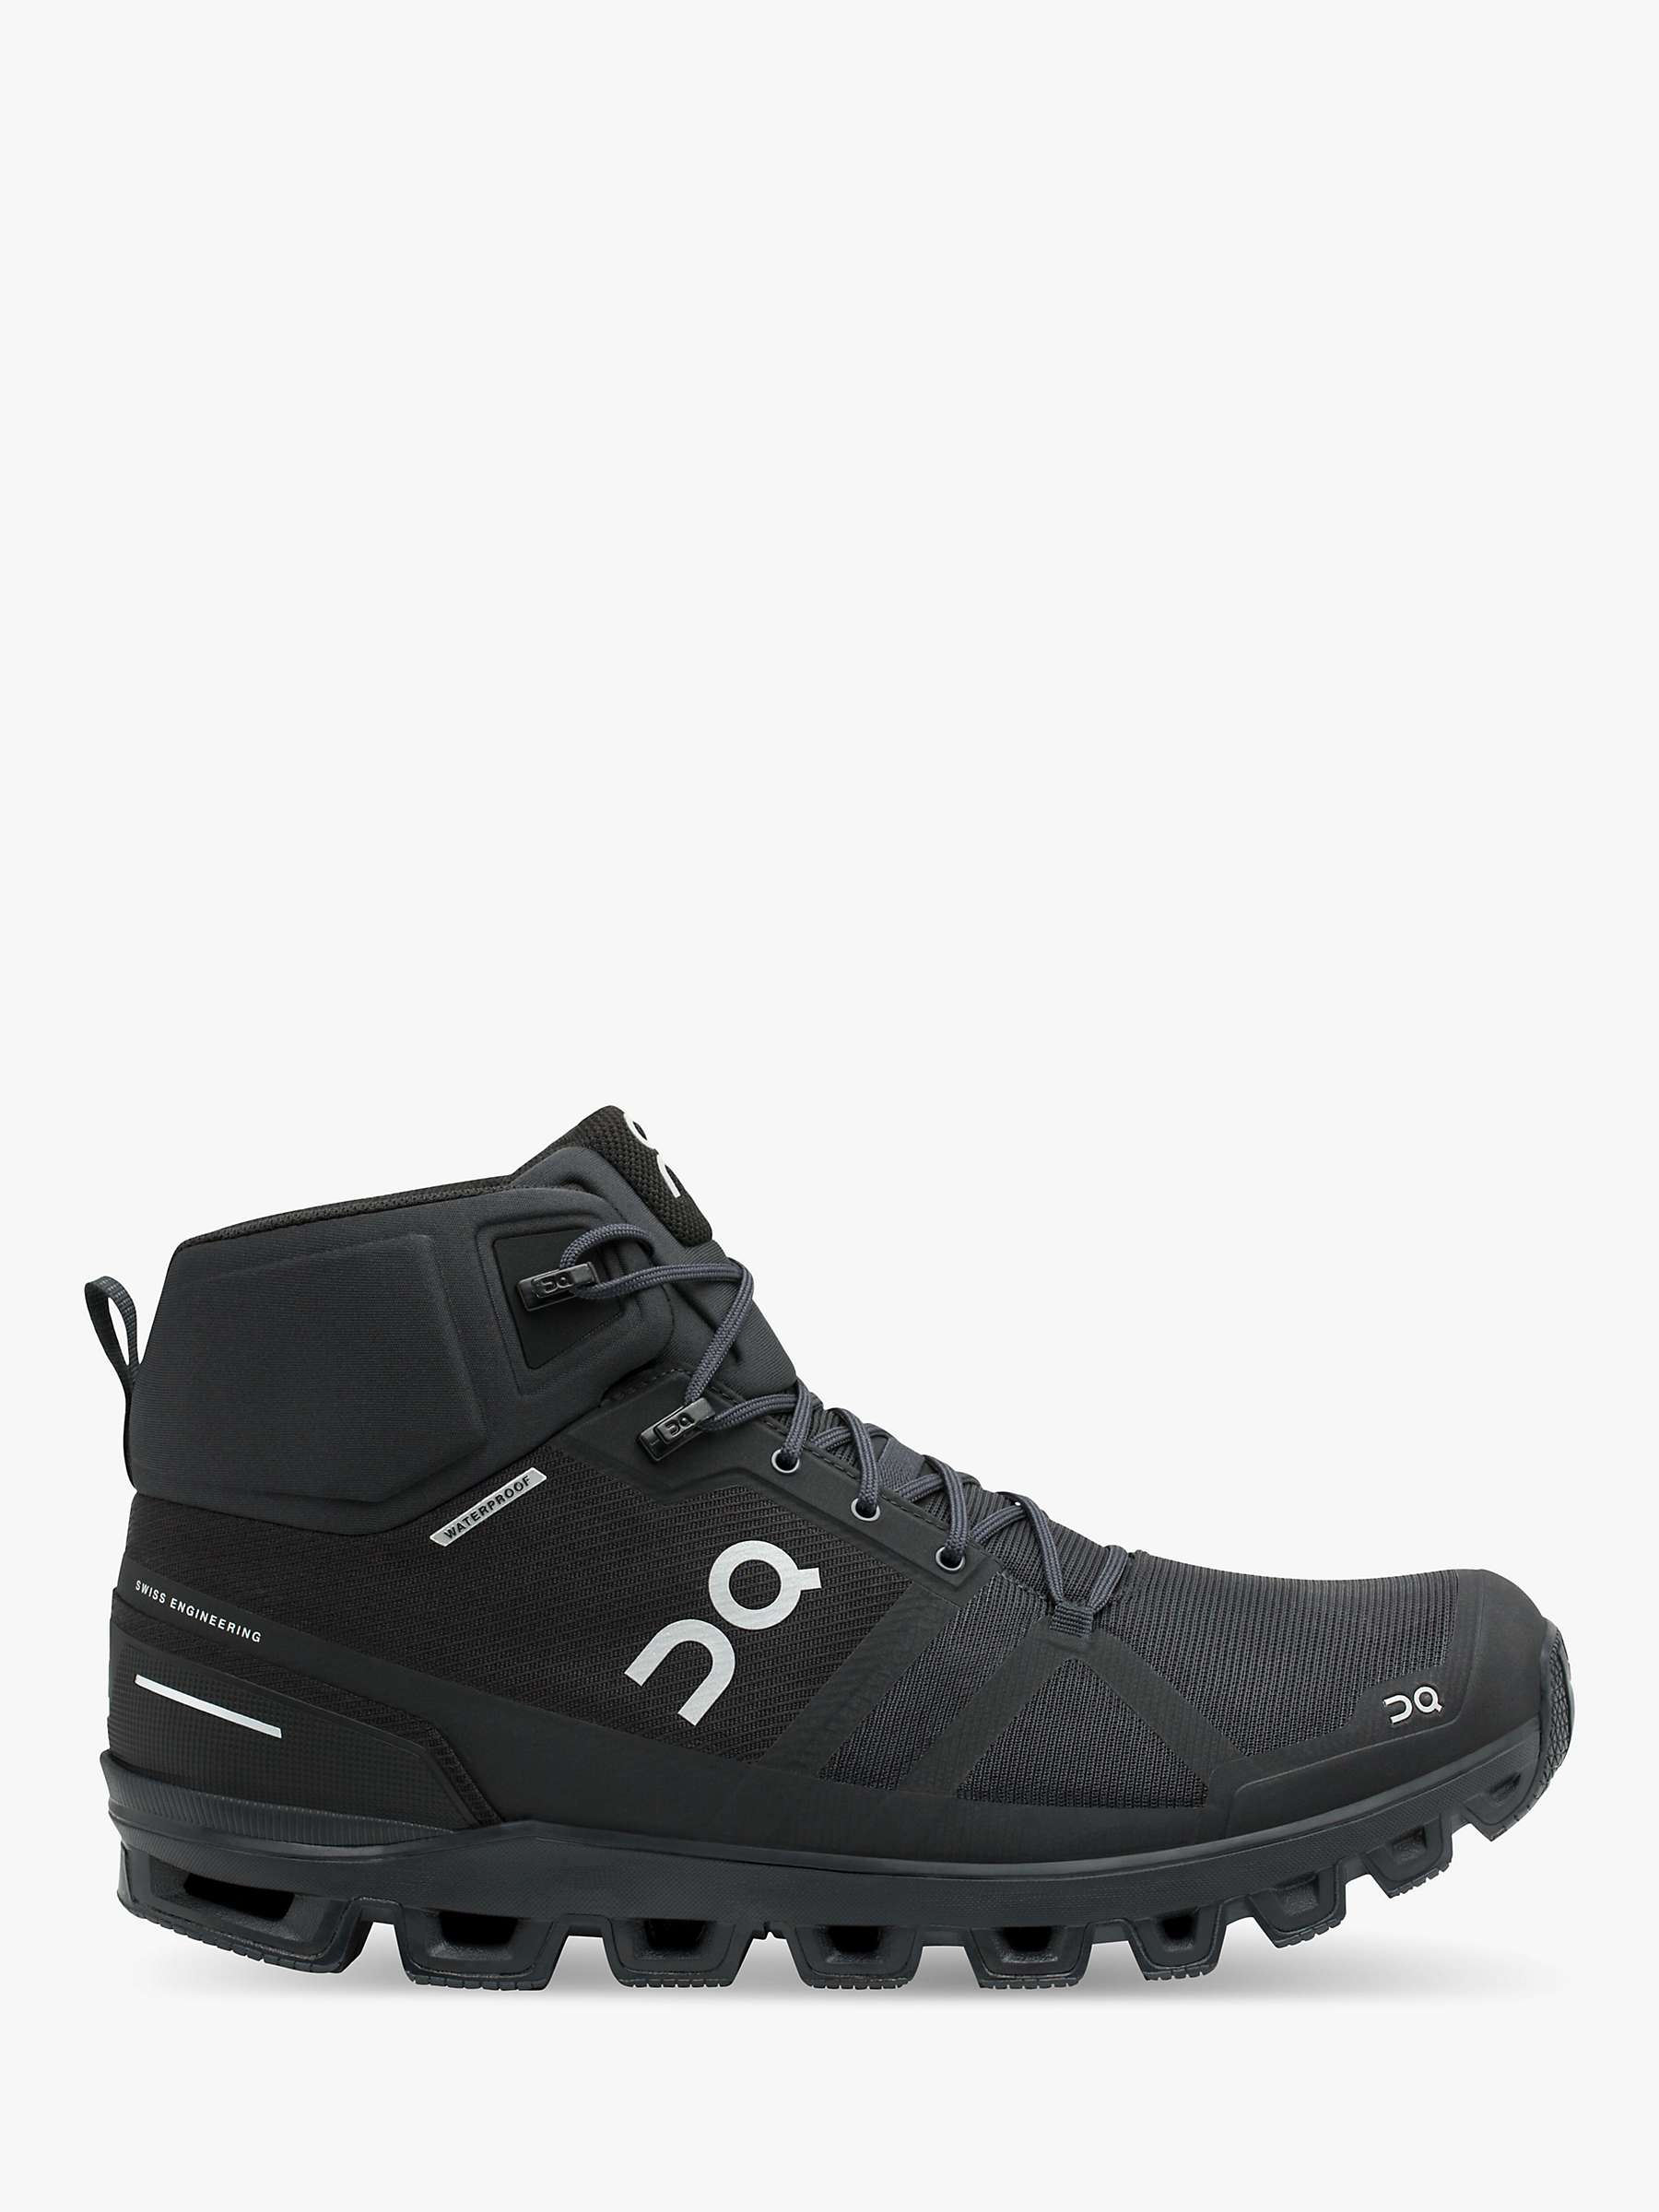 Buy On Cloudrock Men's Waterproof Hiking Boots, All Black Online at johnlewis.com